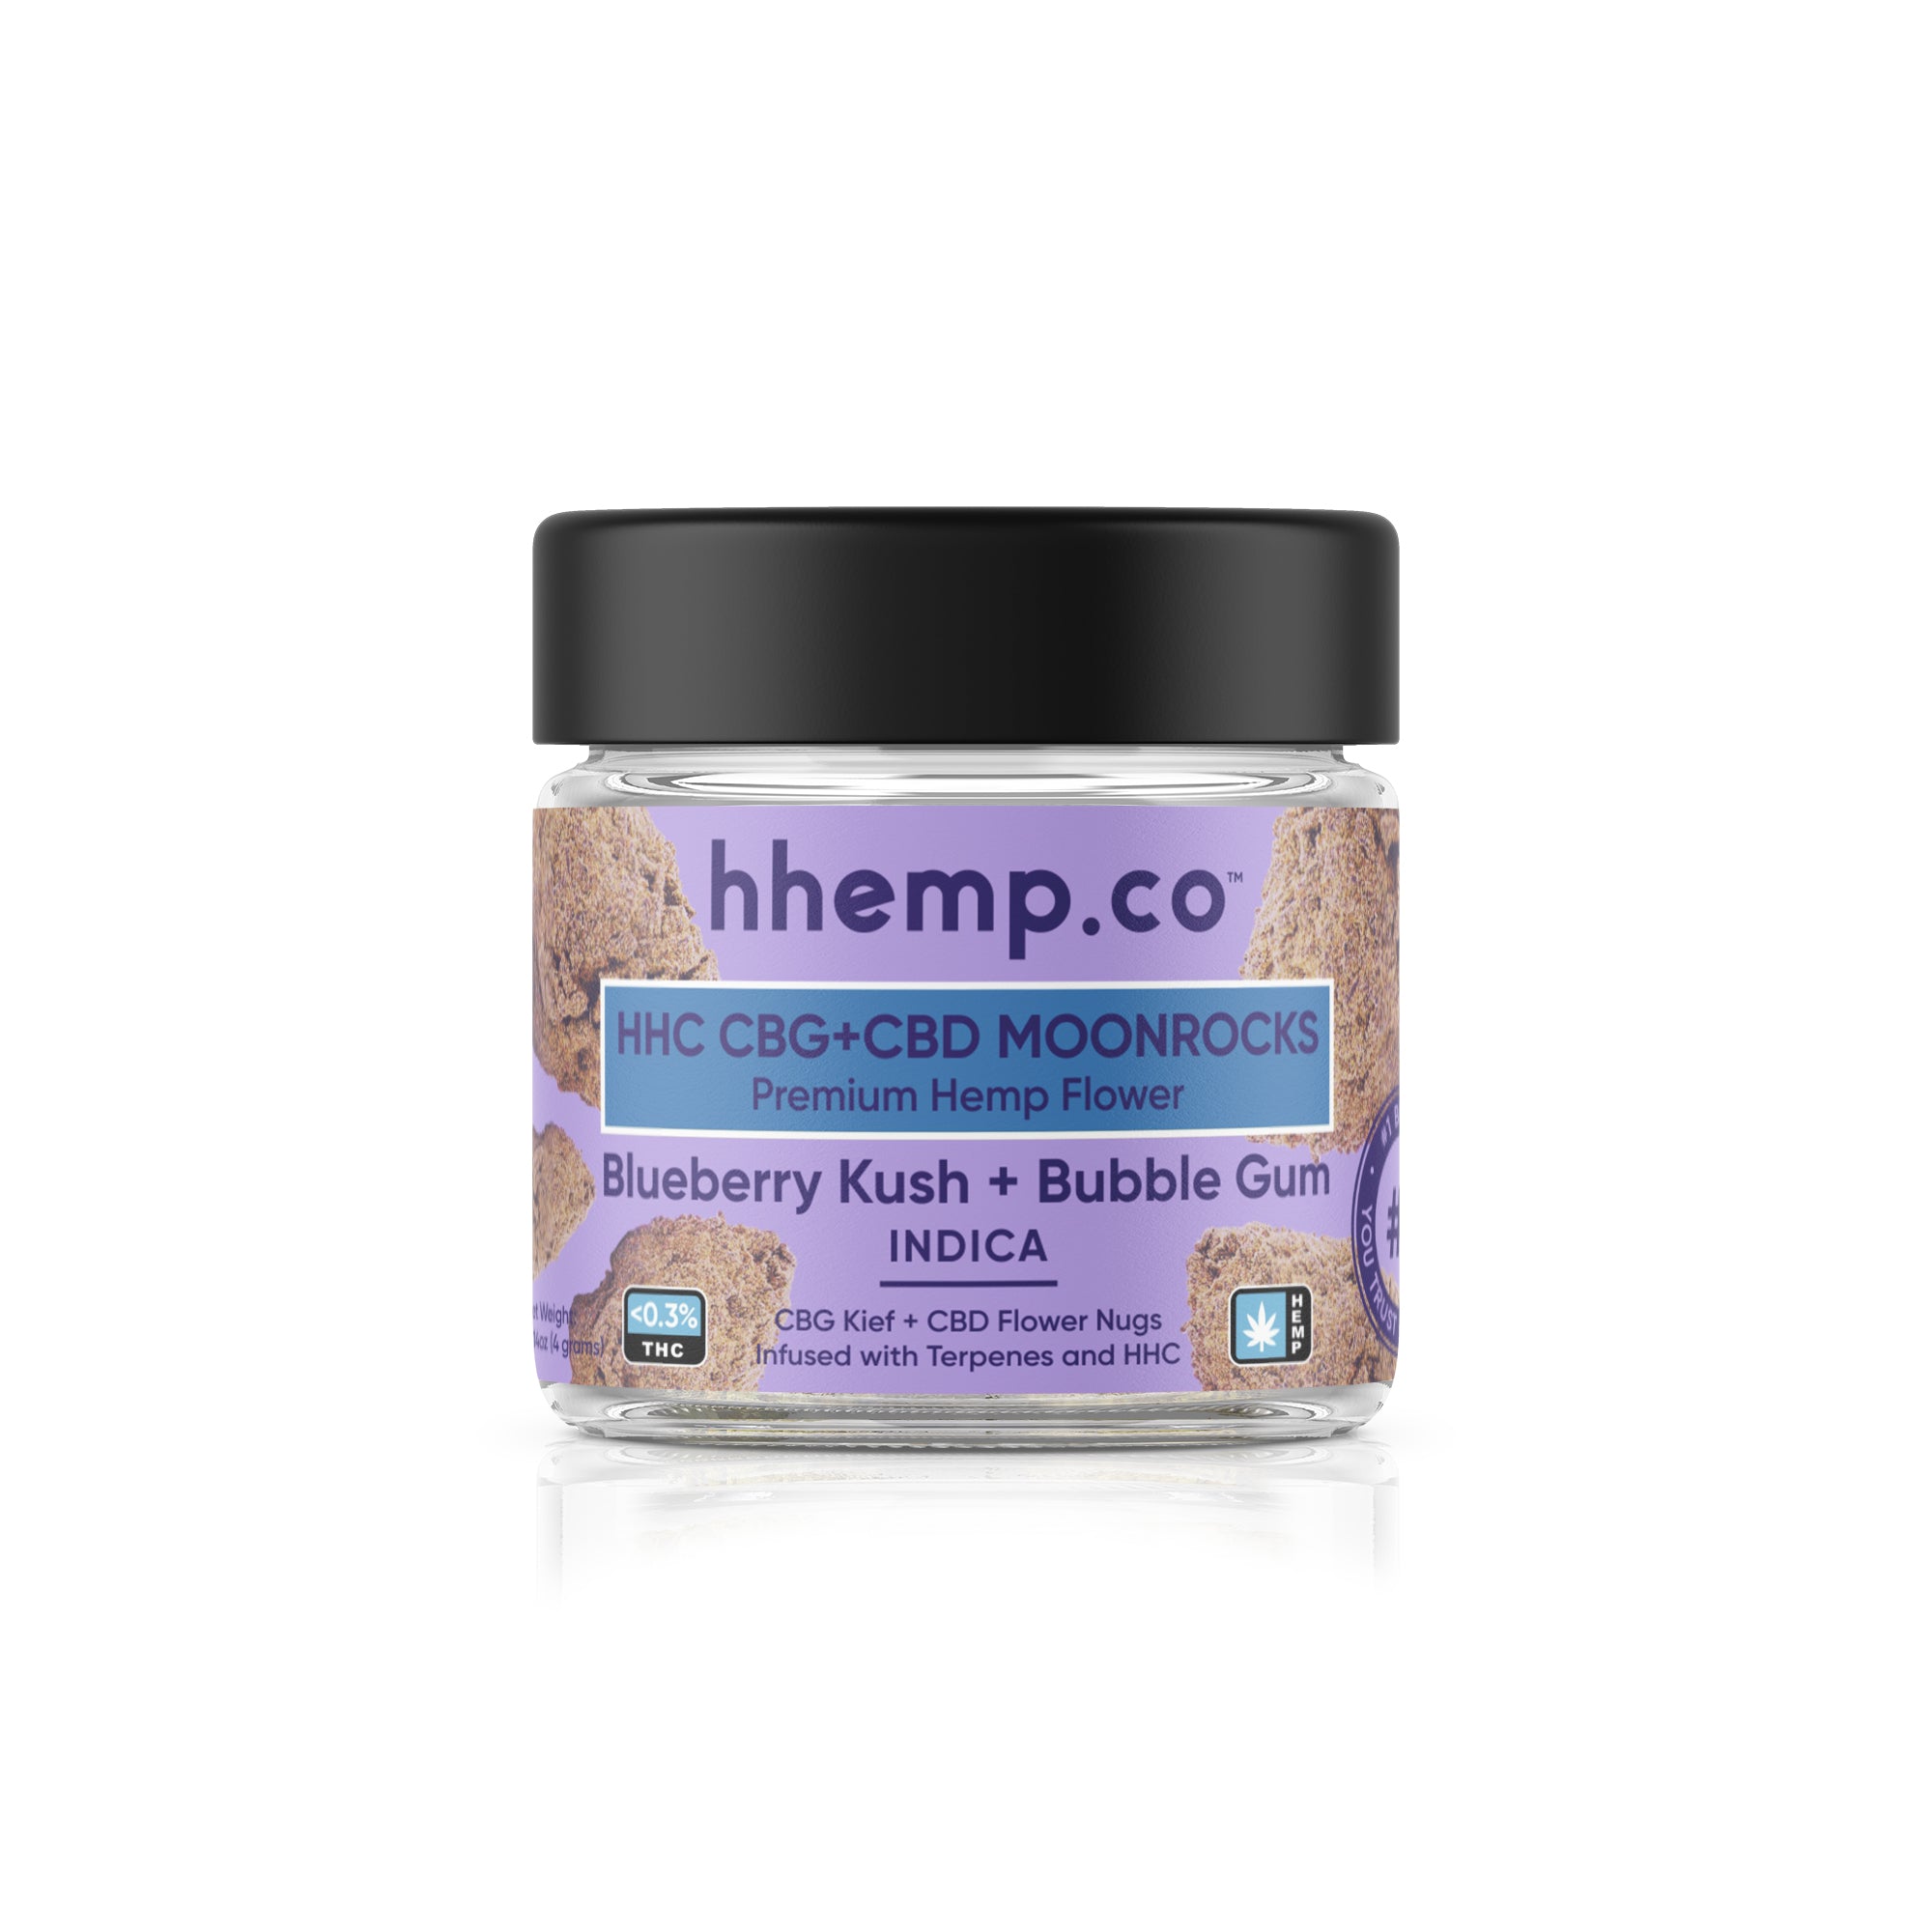 hhemp.co HHC Moonrock Flower - Blueberry Kush+Bubble Gum (INDICA)